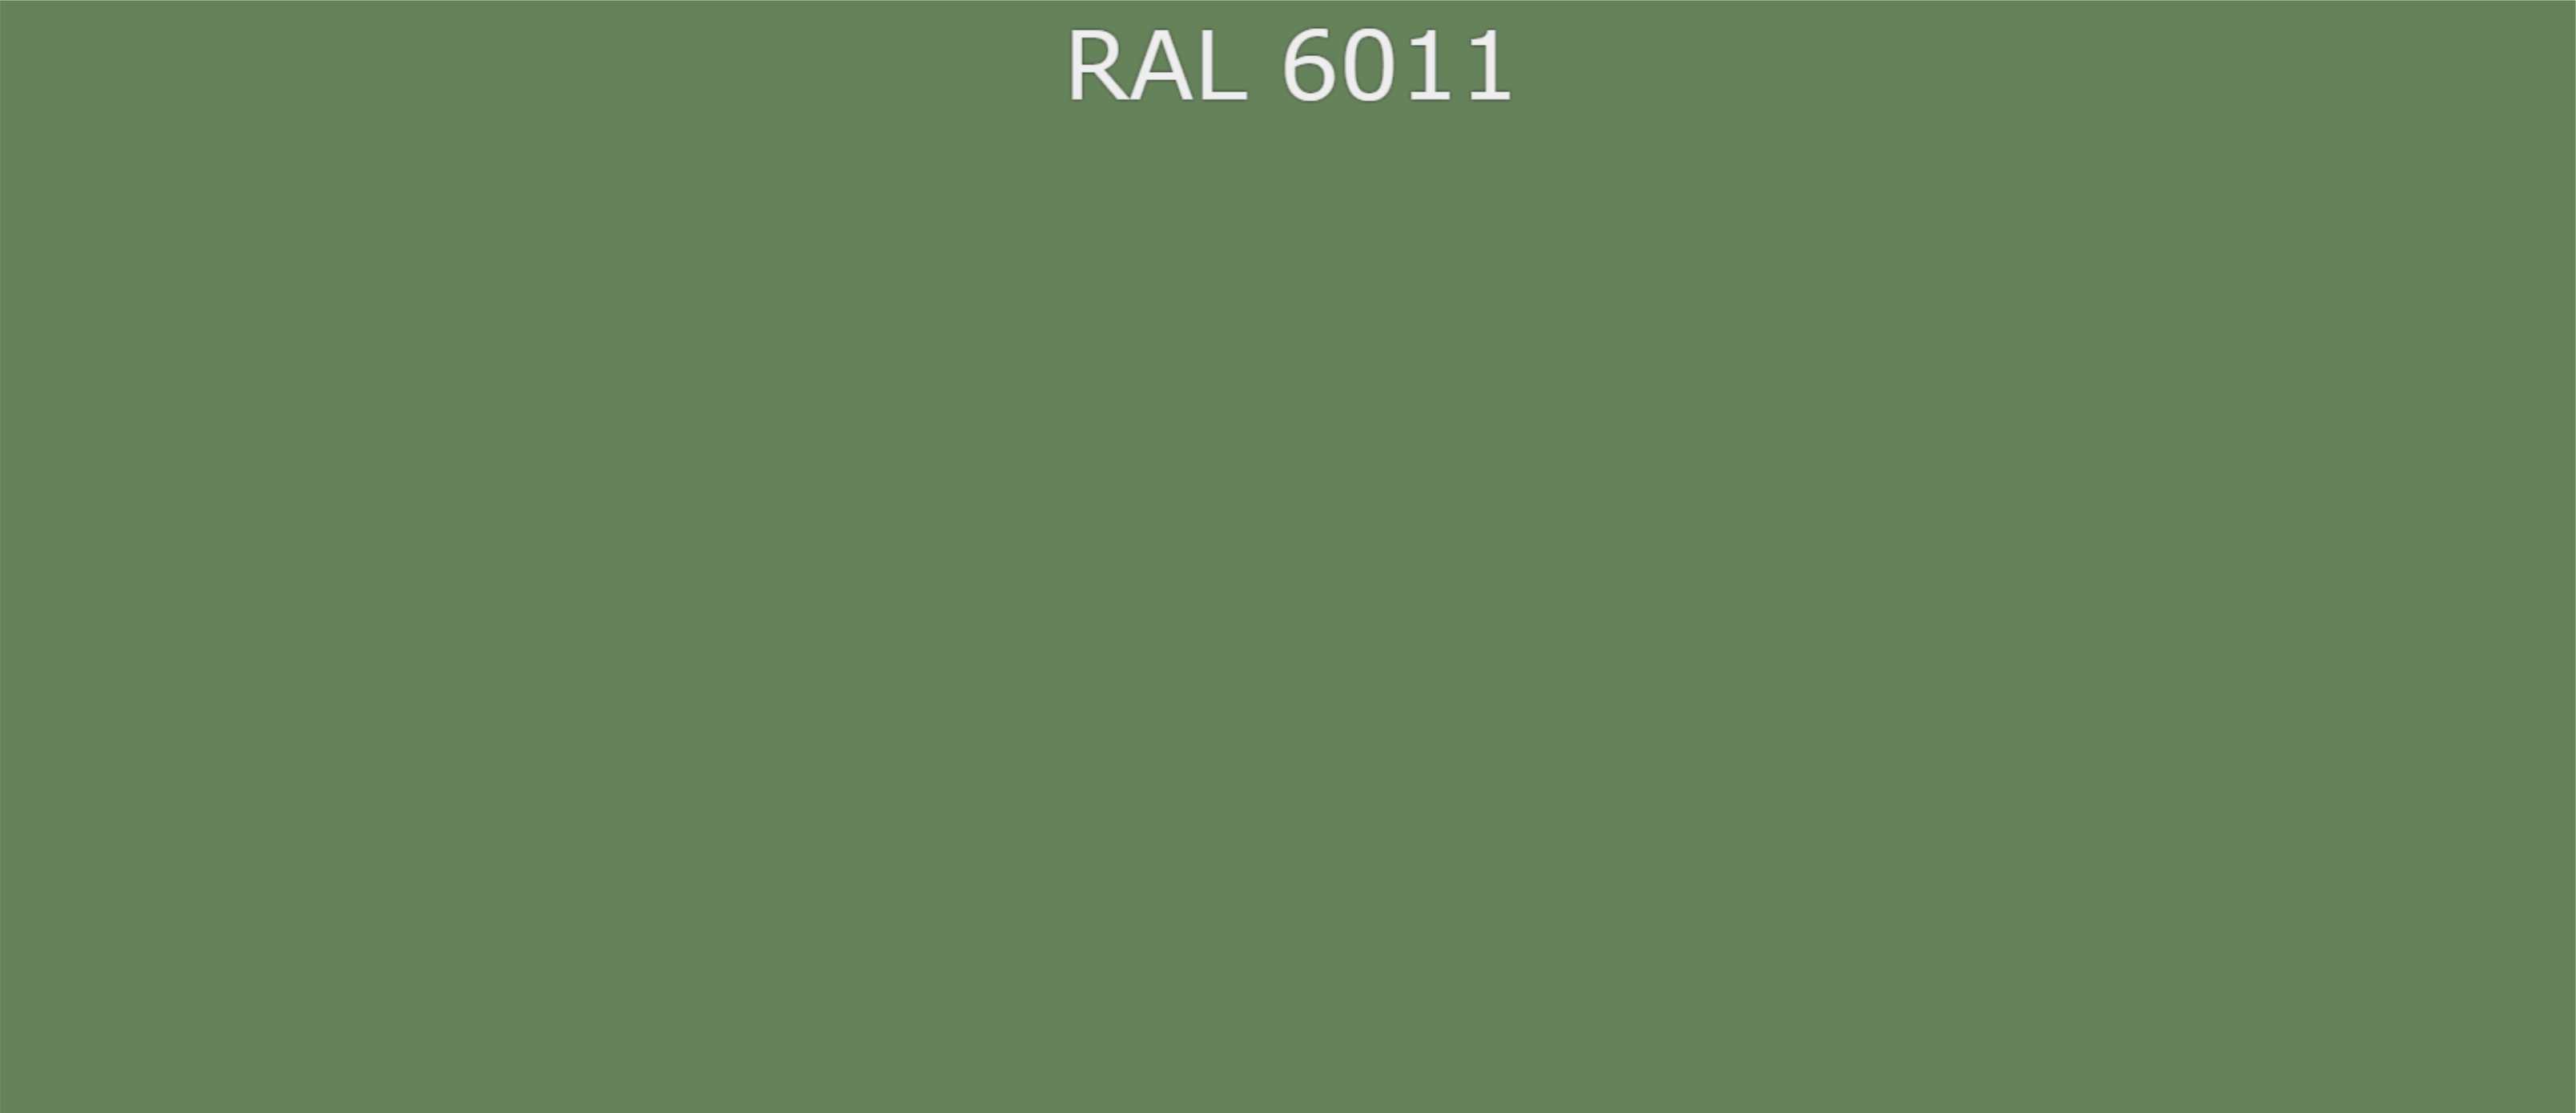 Код болотного. RAL 6011 цвет. RAL 6011 краска. Палитра RAL 6011 Резедово зеленый. RAL 6011 Резедово-зелёный.